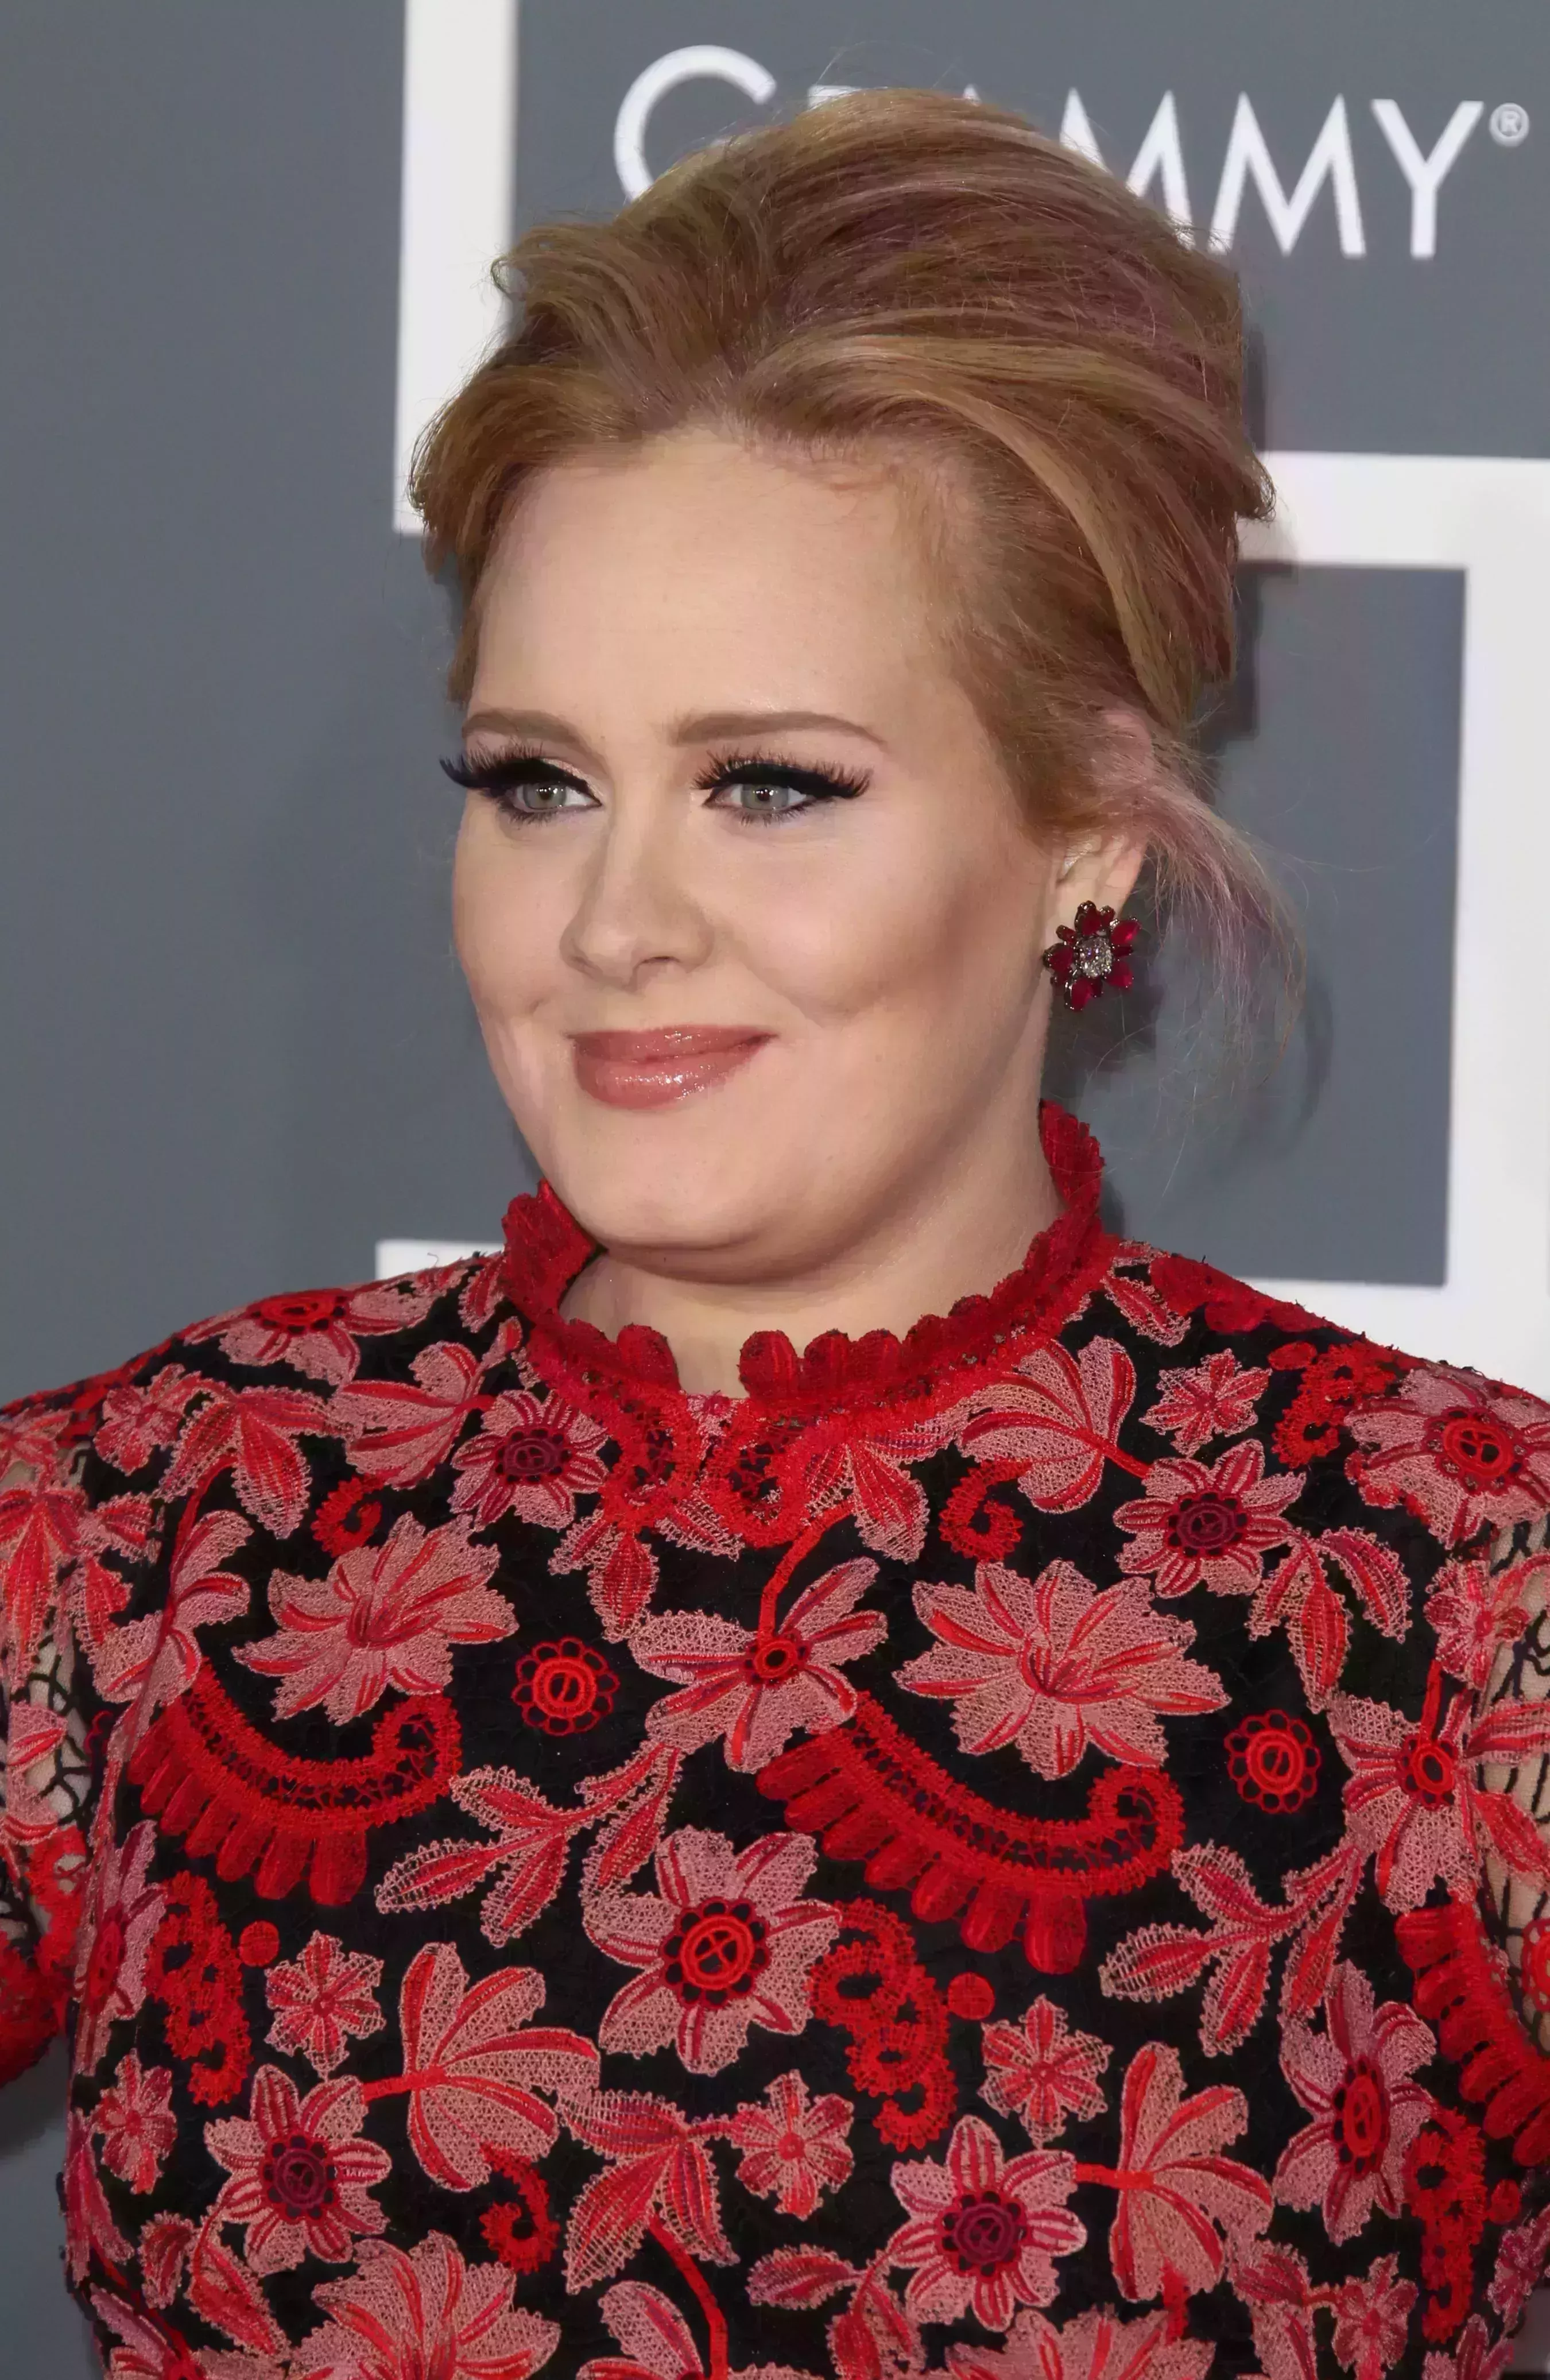 Adele’s Royal Layered Updo Hair